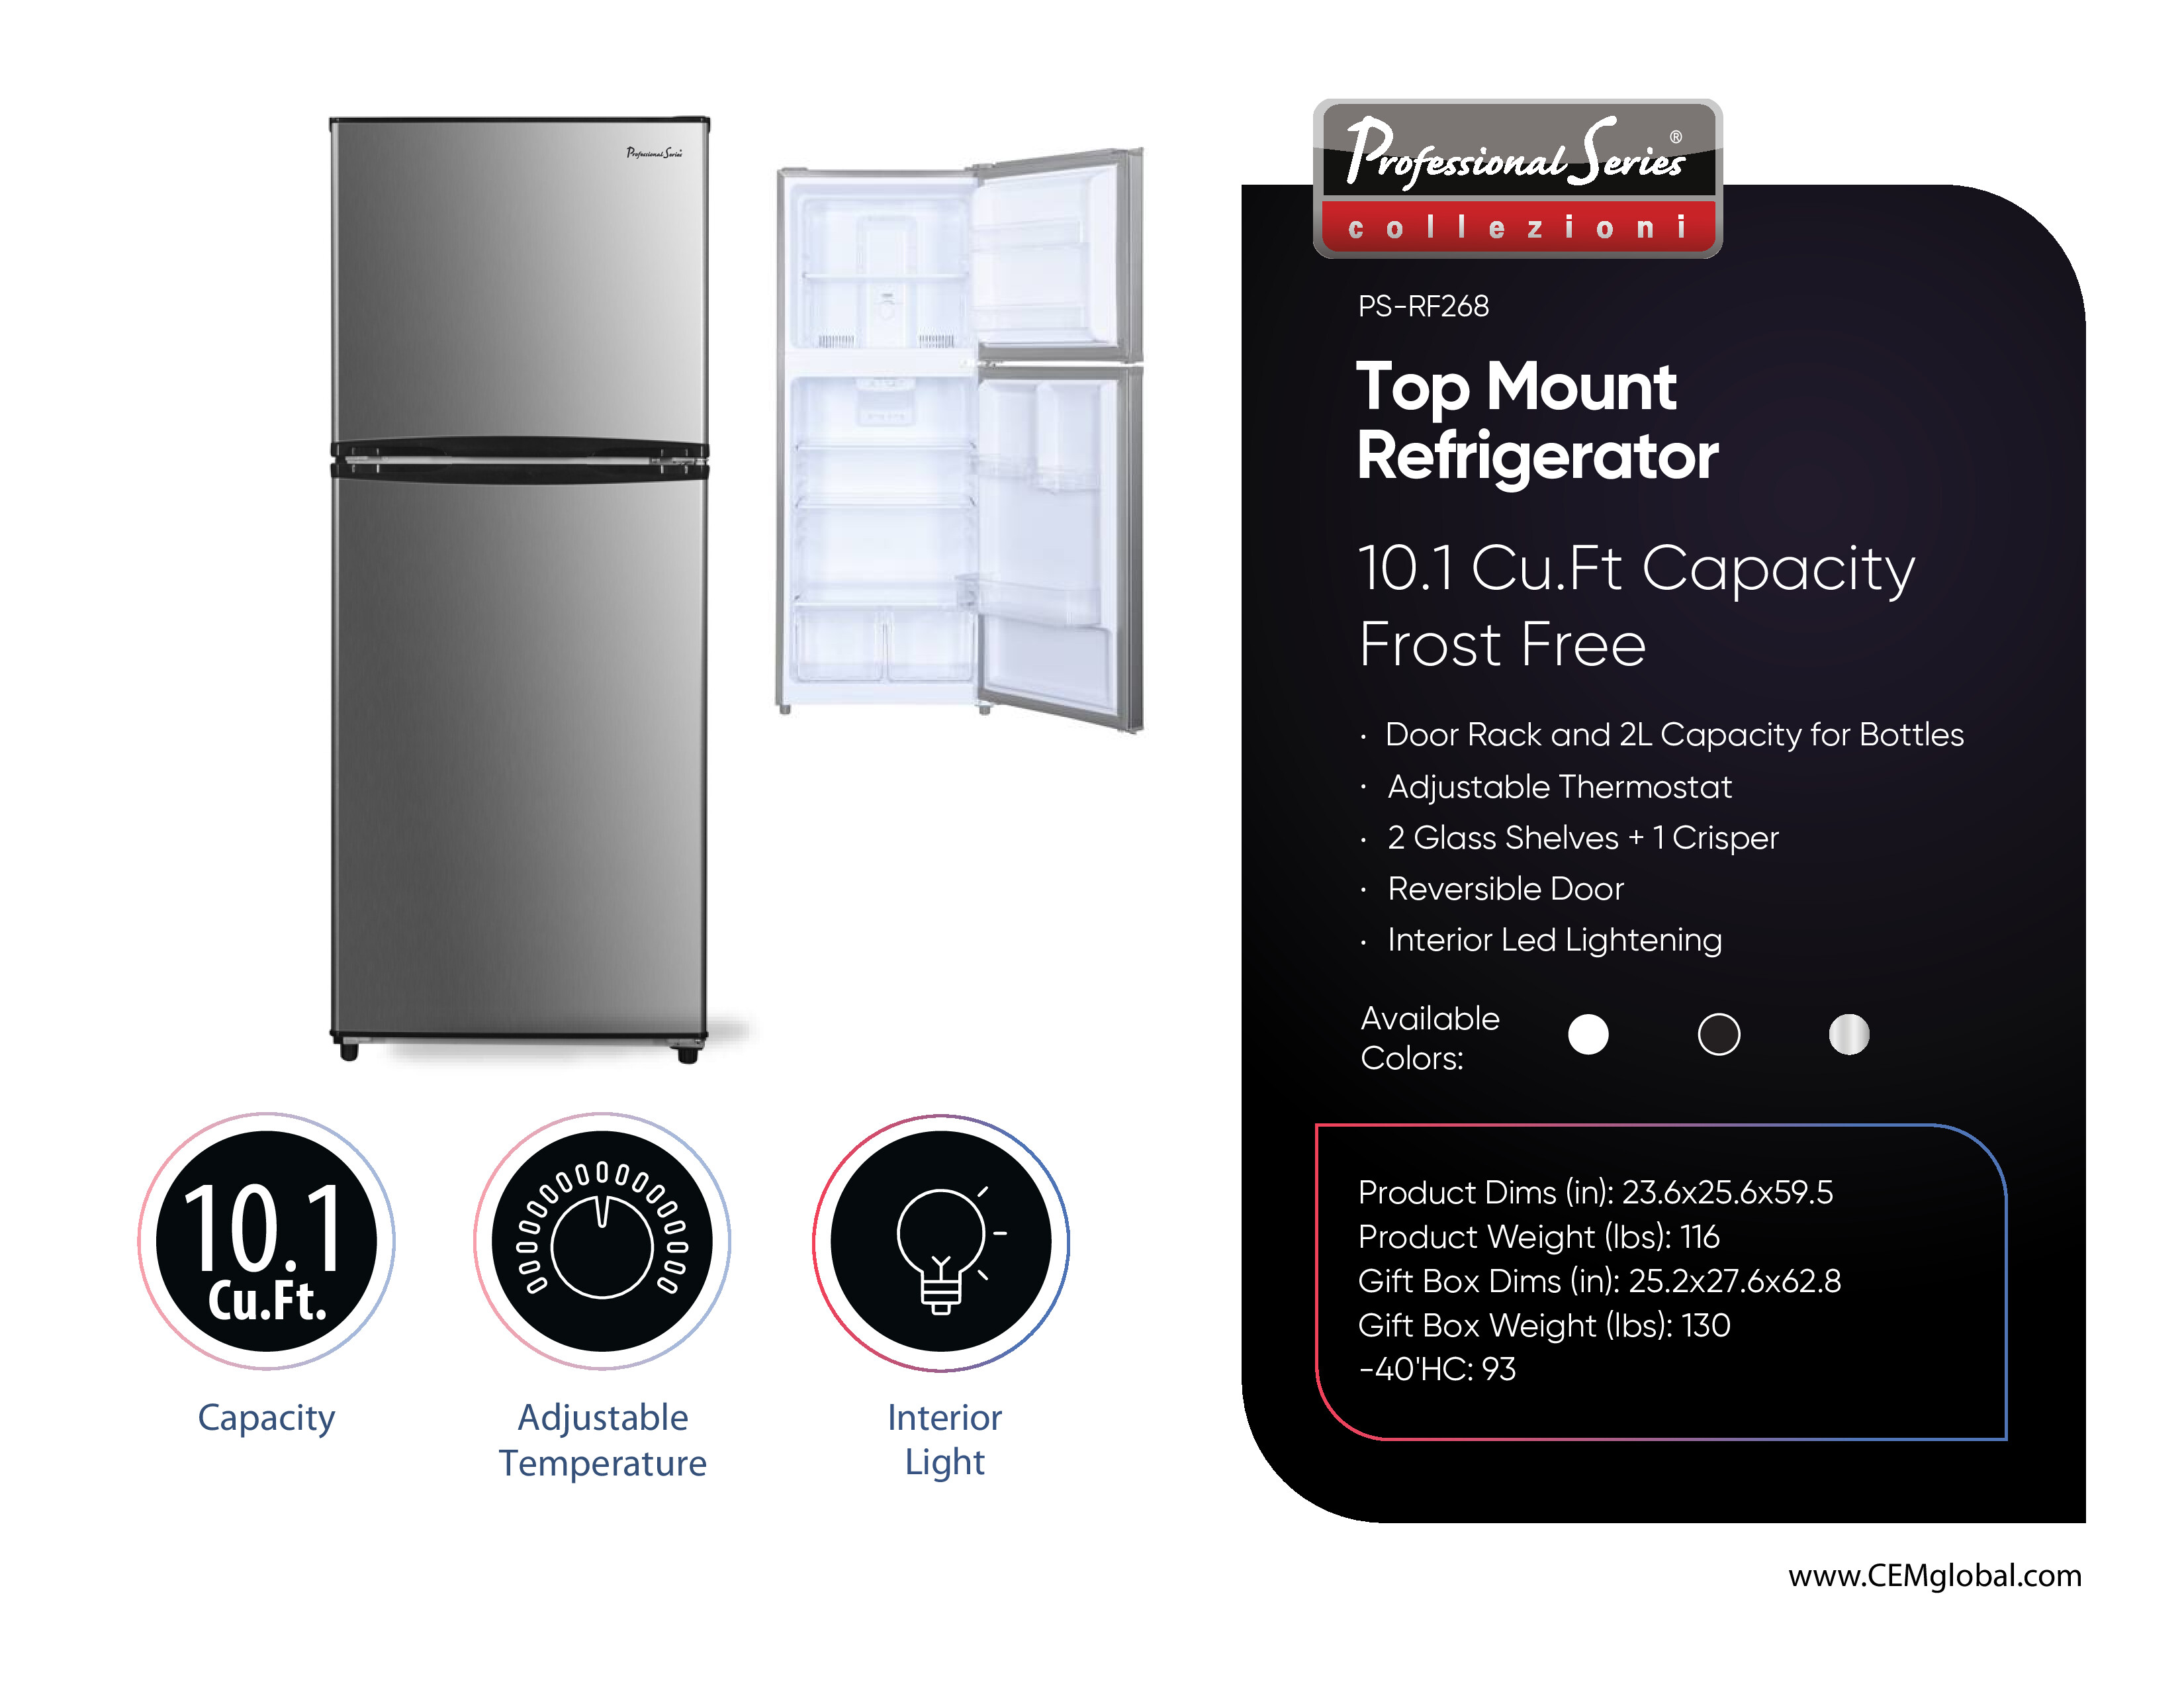 Top Mount Refrigerator 10.1 Cu.Ft.